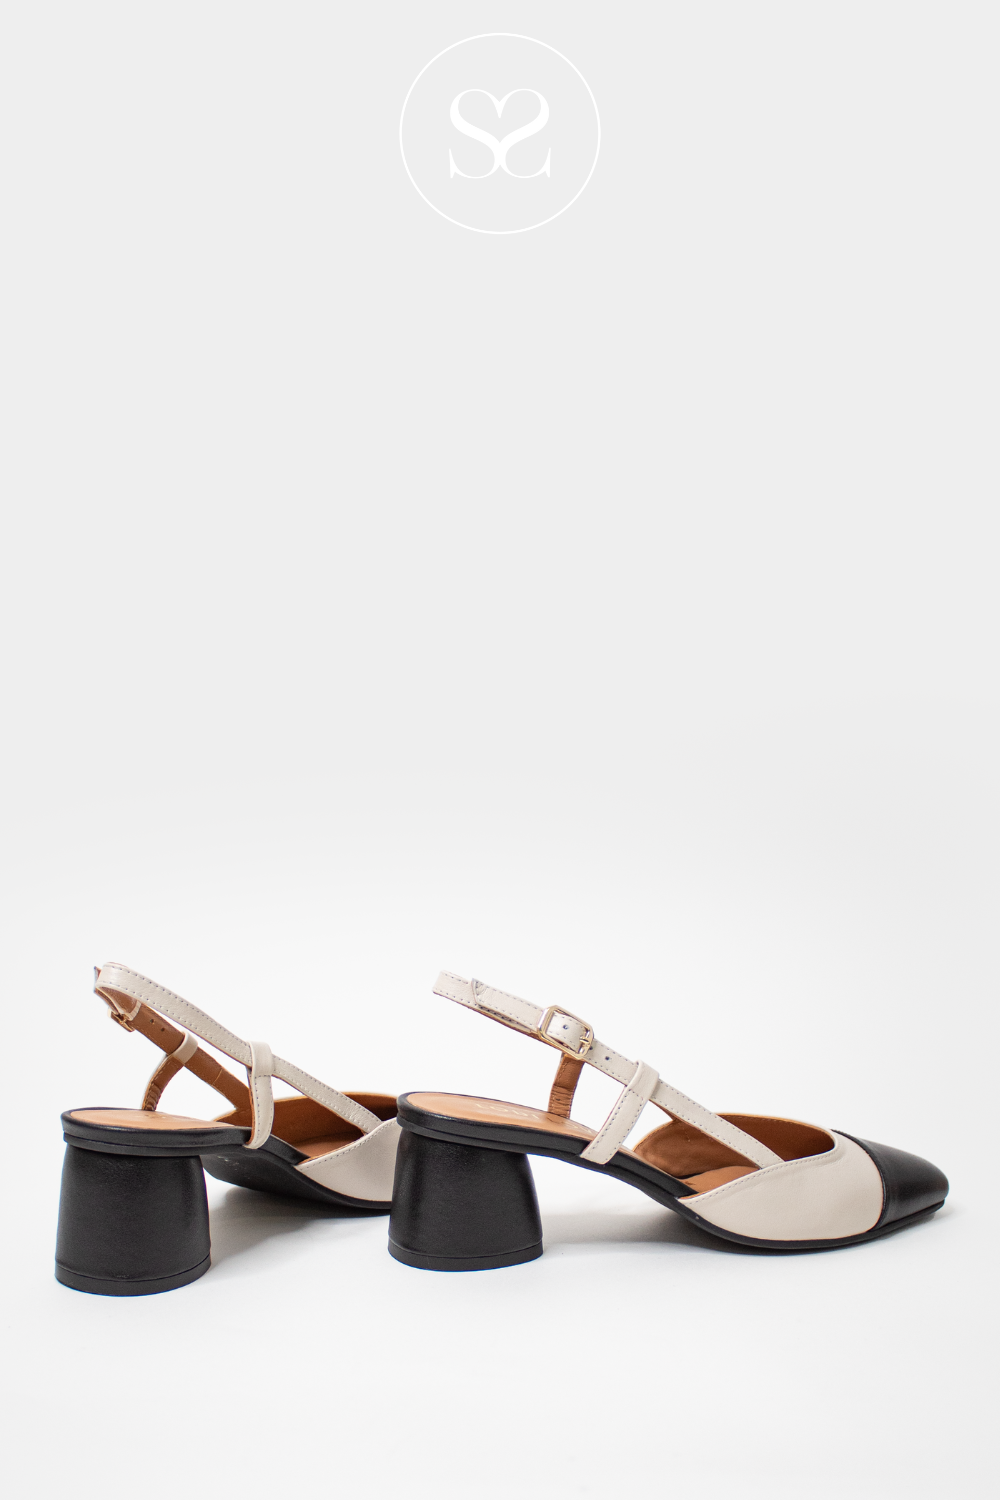 lodi rol4343 black and cream heeled shoes